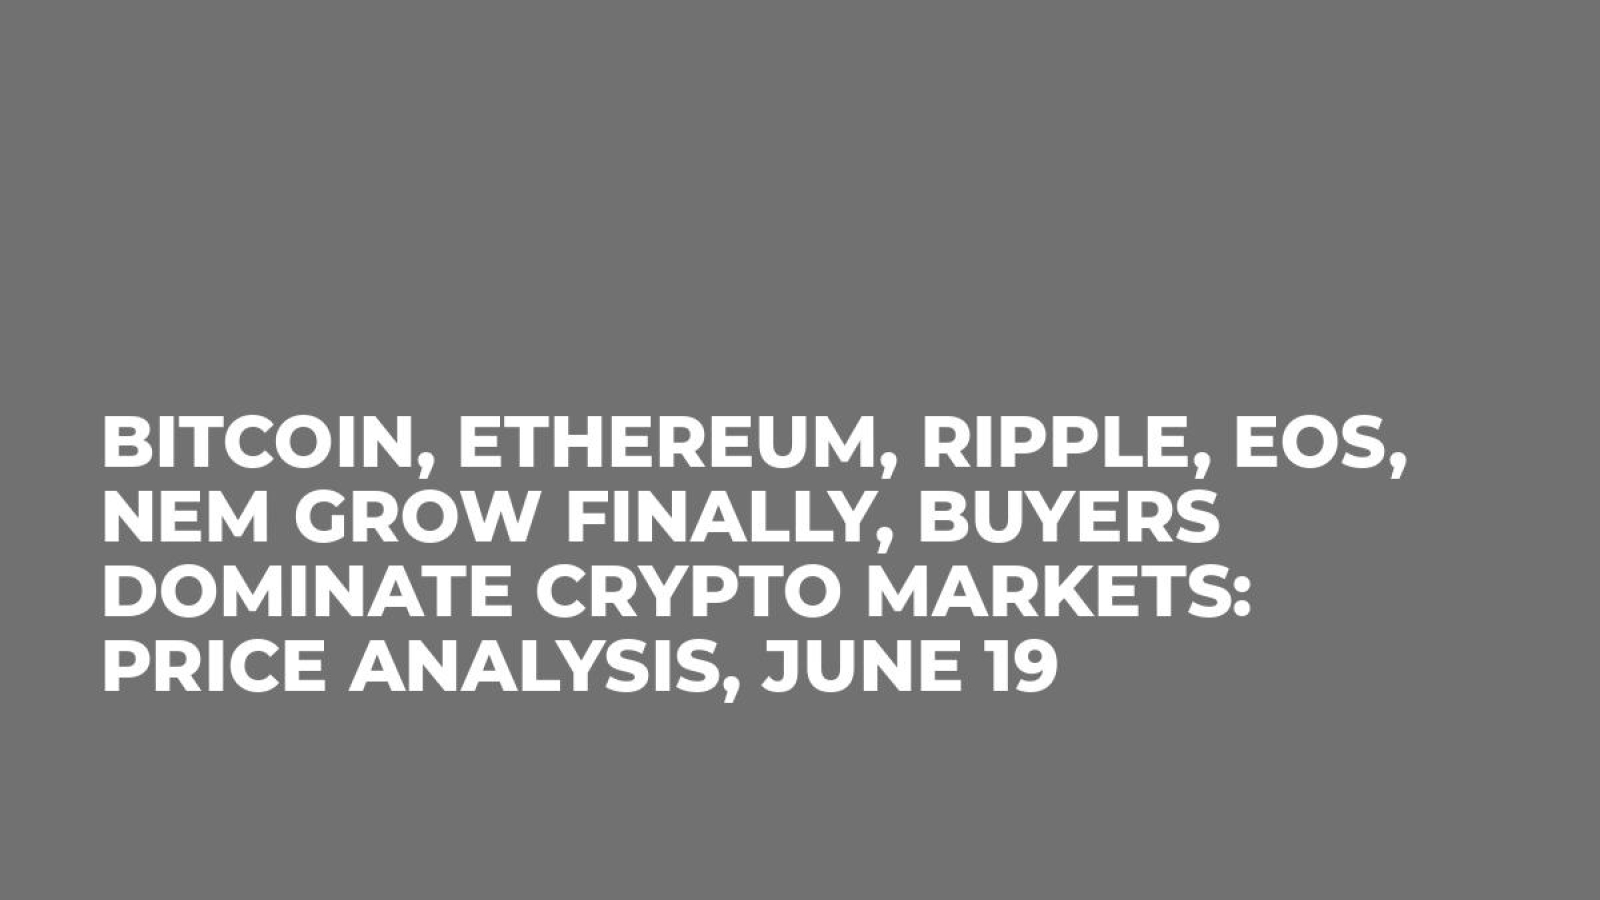 Bitcoin, Ethereum, Ripple, EOS, NEM Grow Finally, Buyers Dominate Crypto Markets: Price Analysis, June 19